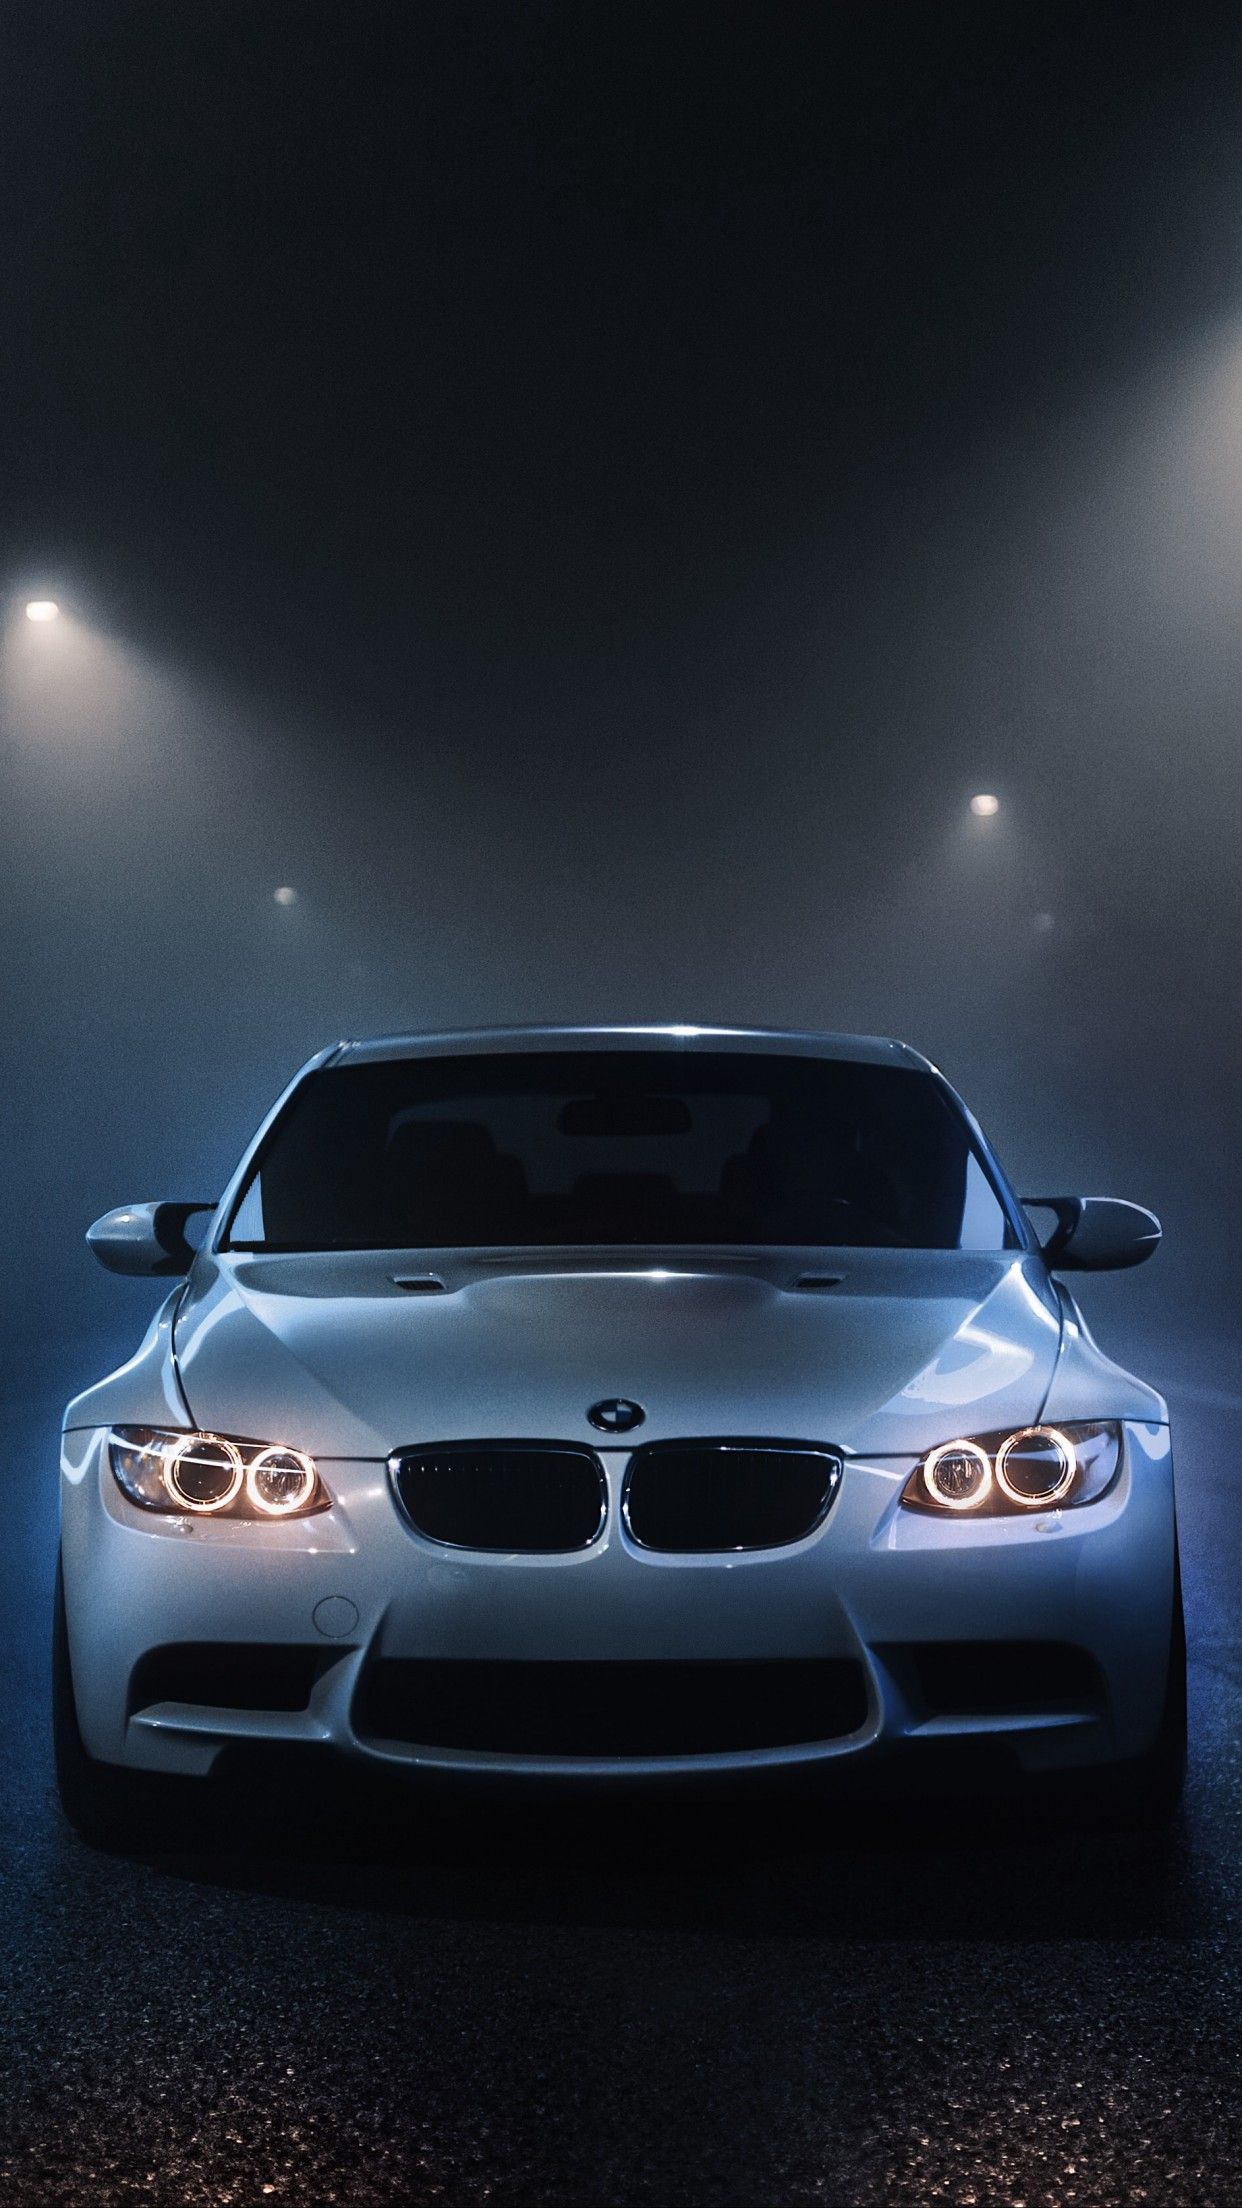 BMW M3 4K Wallpaper, White Cars, Dark Background, Night Time, Street Lights, Foggy Night, Black Dark